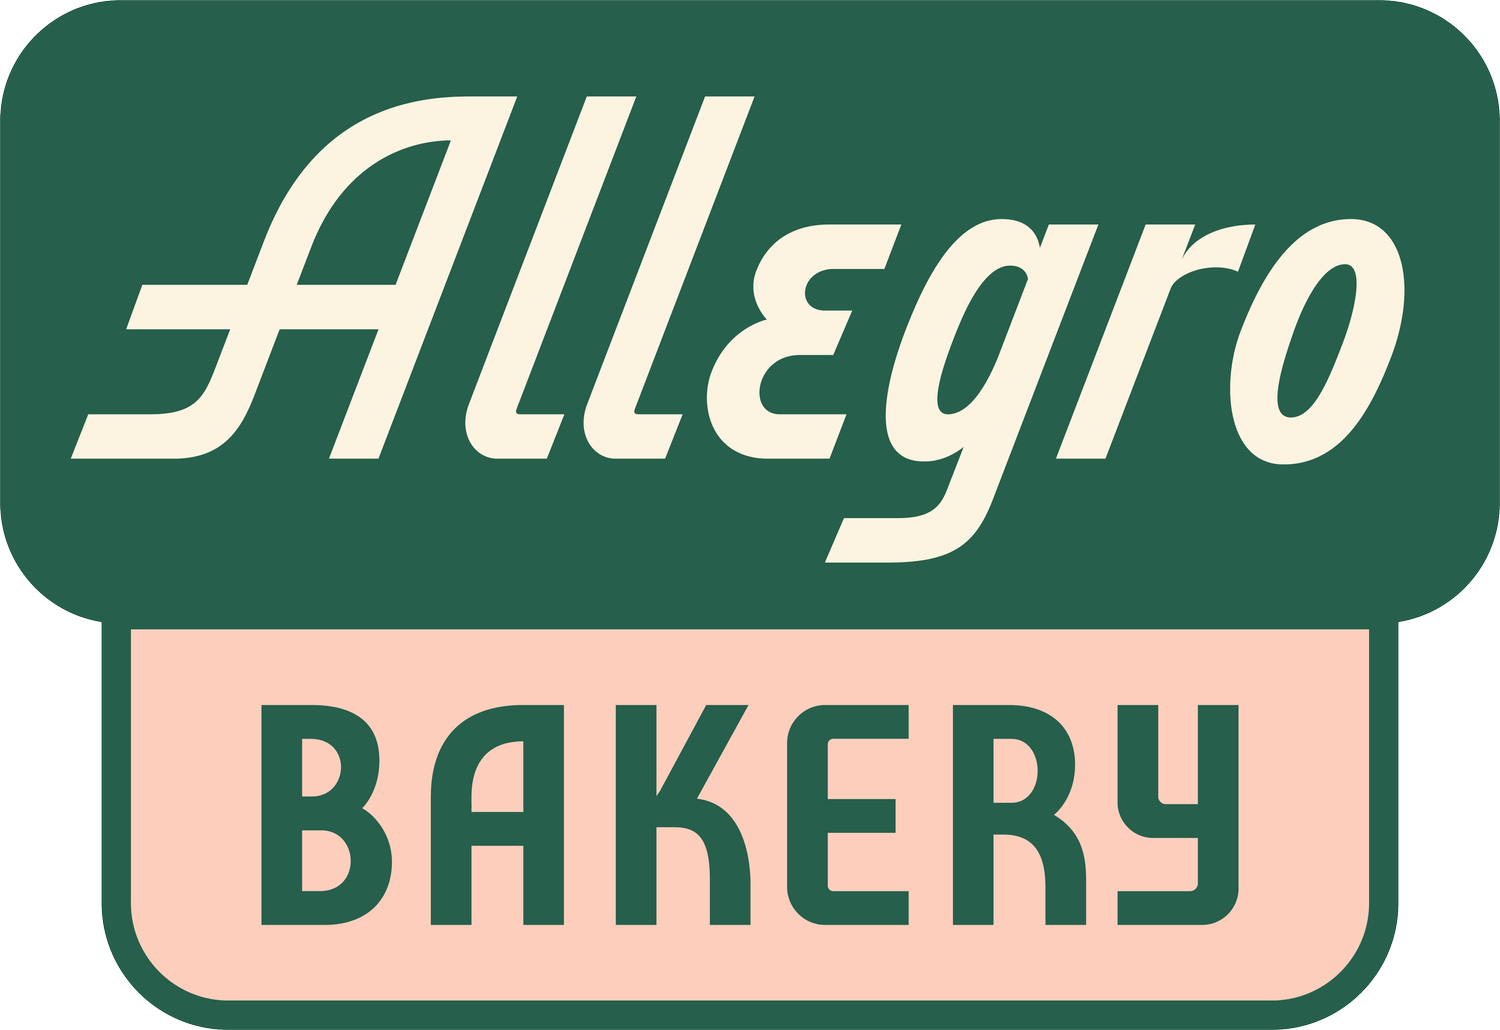 Allegro Bakery